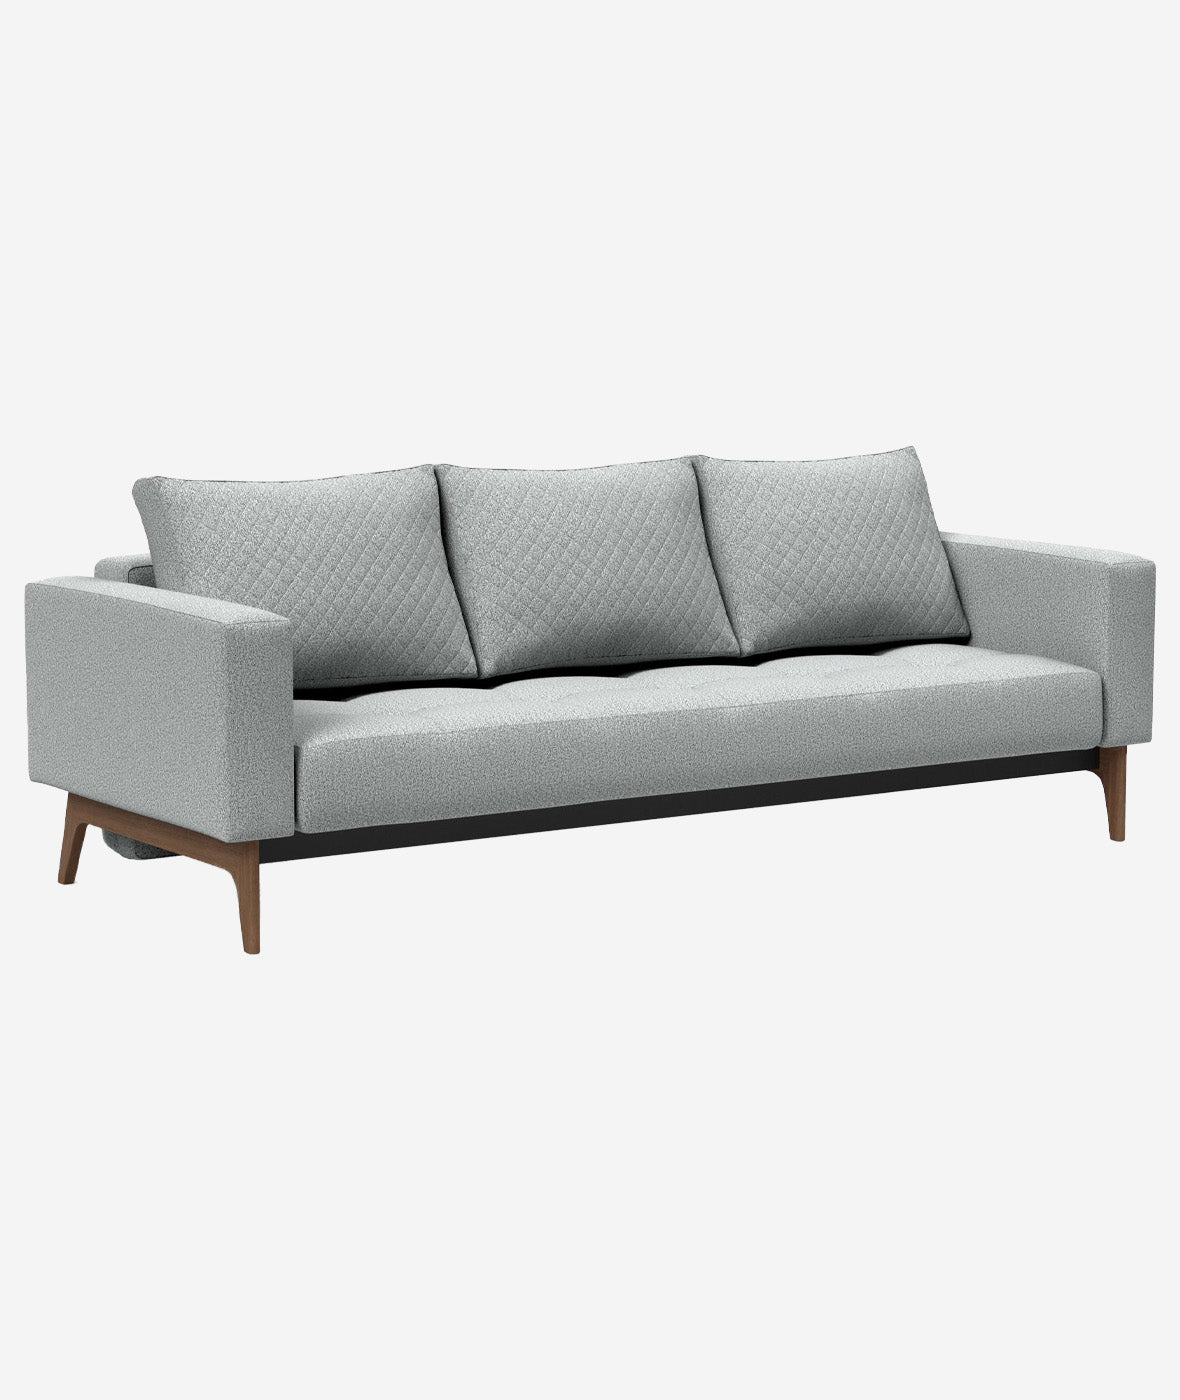 Cassius Quilt Deluxe Sleeper Sofa - More Options